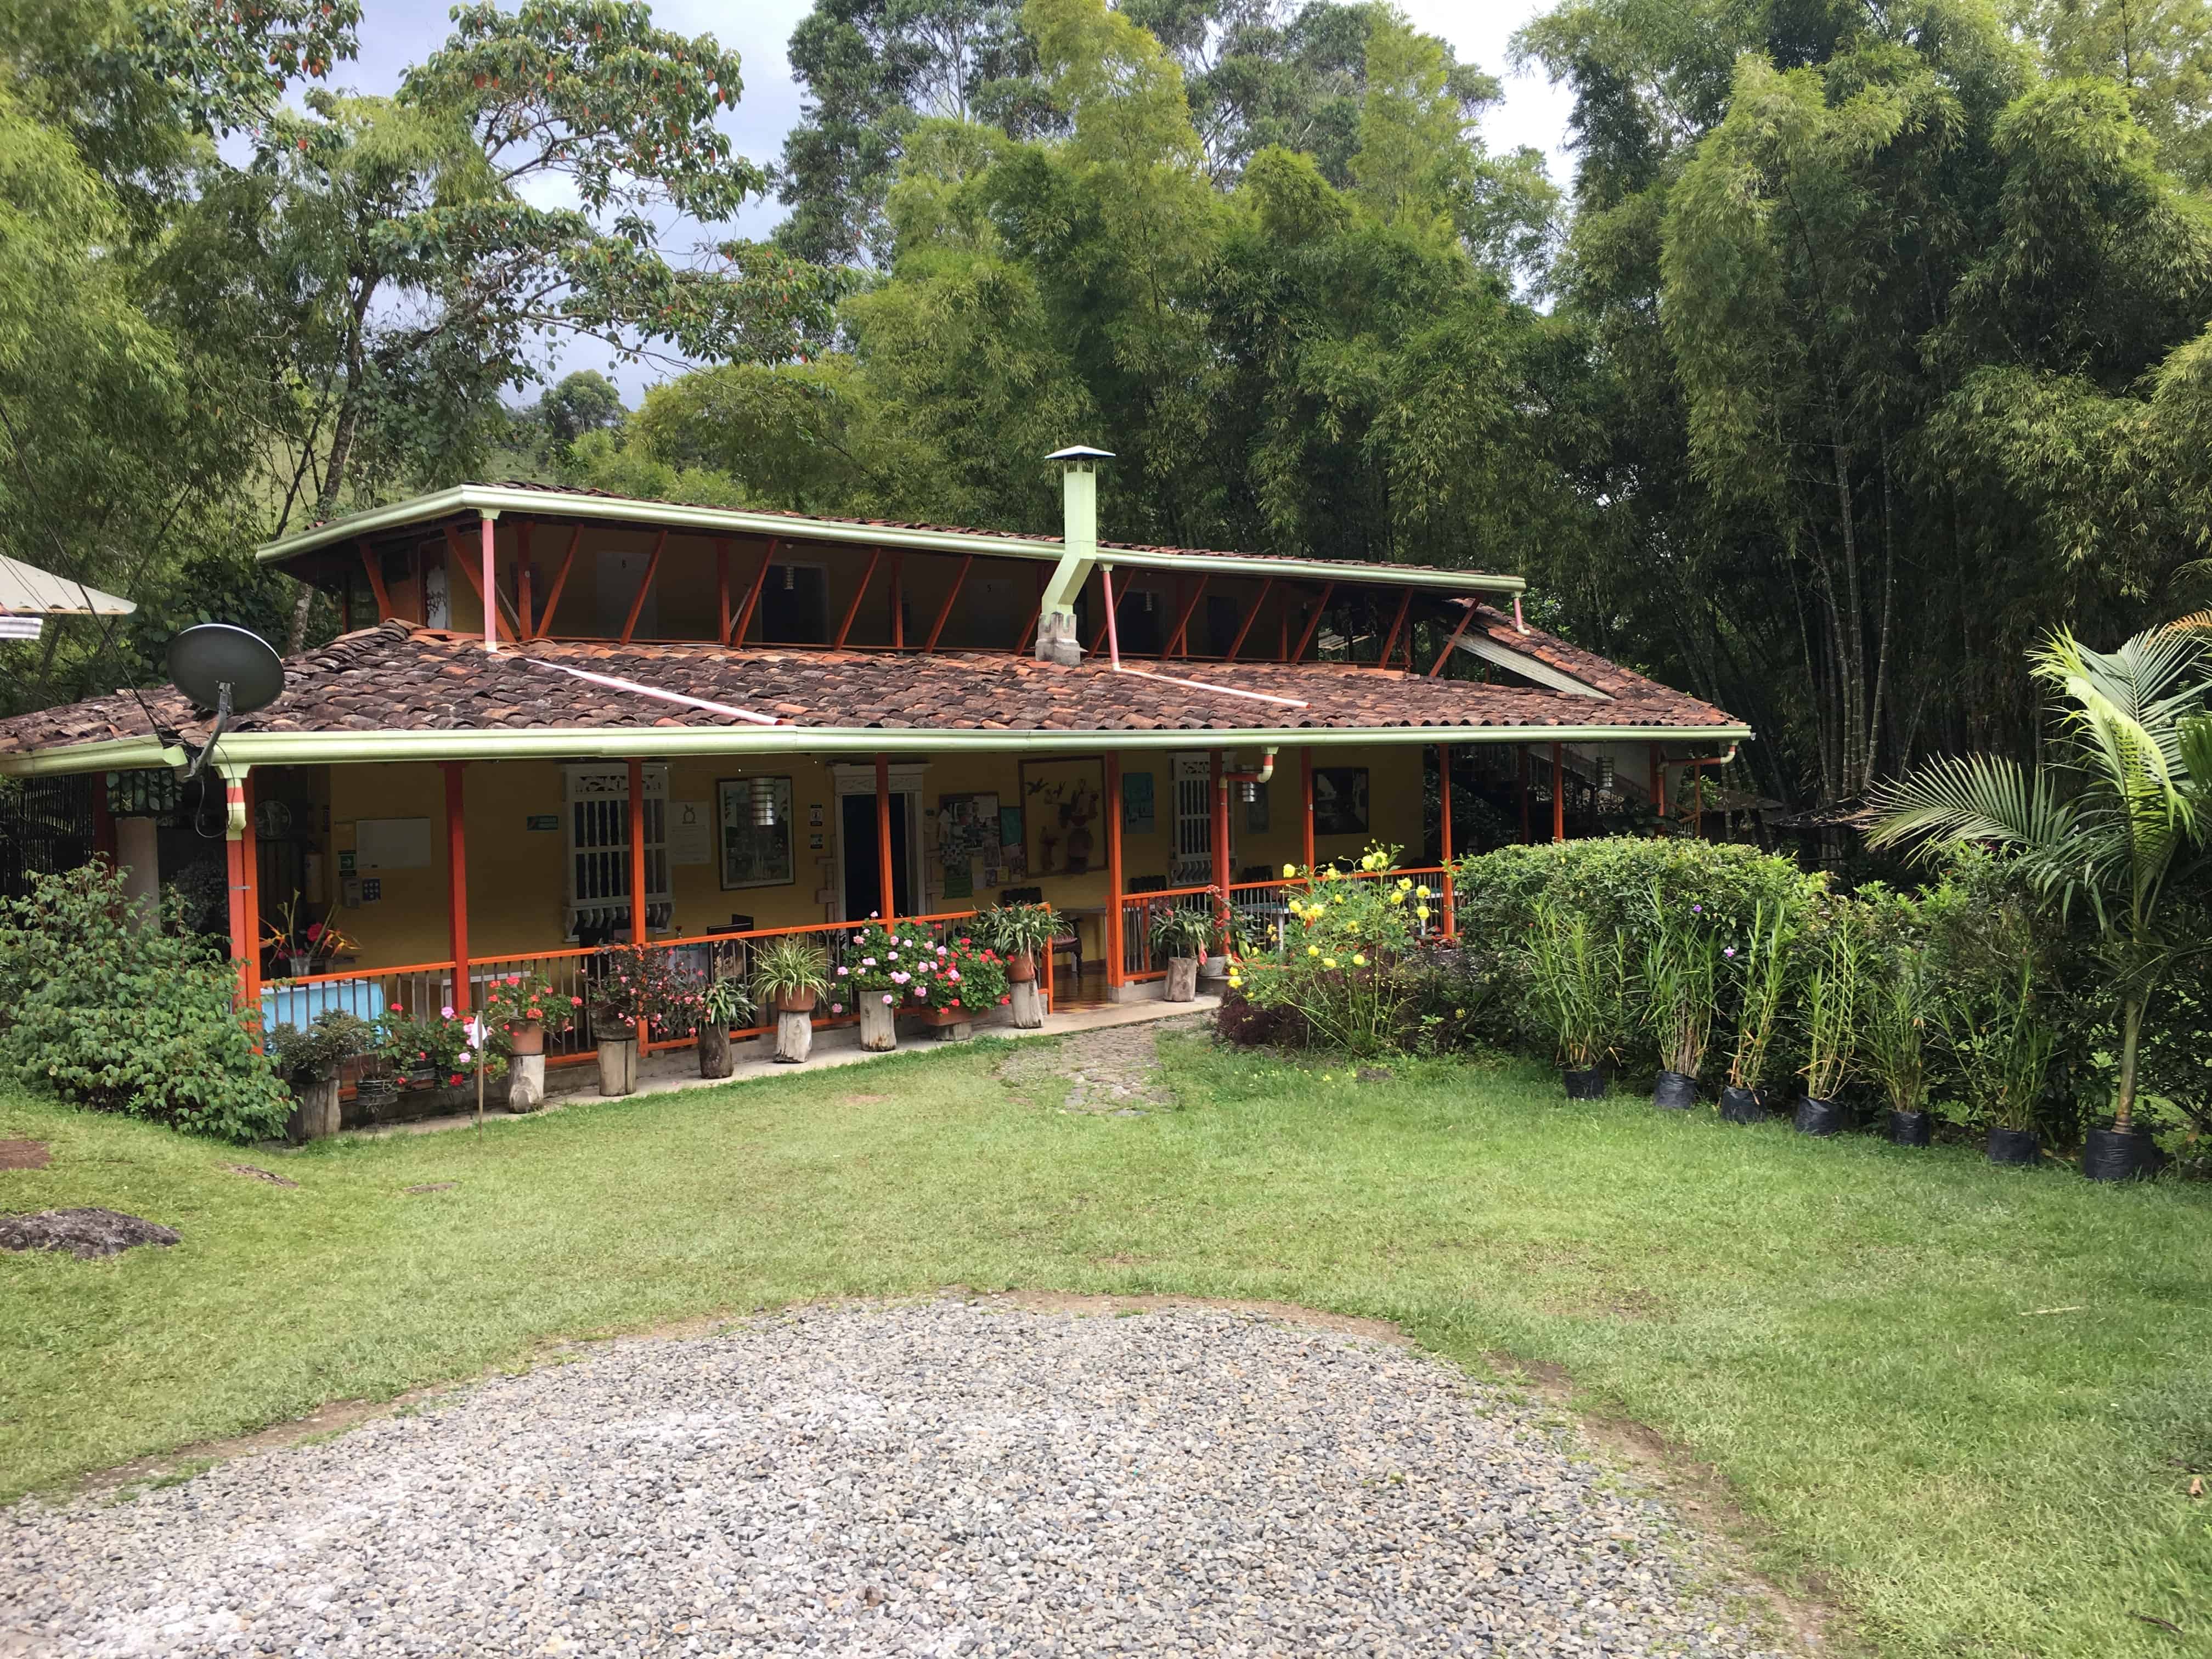 Kantarrana Casa de Campo in Jardín, Antioquia, Colombia